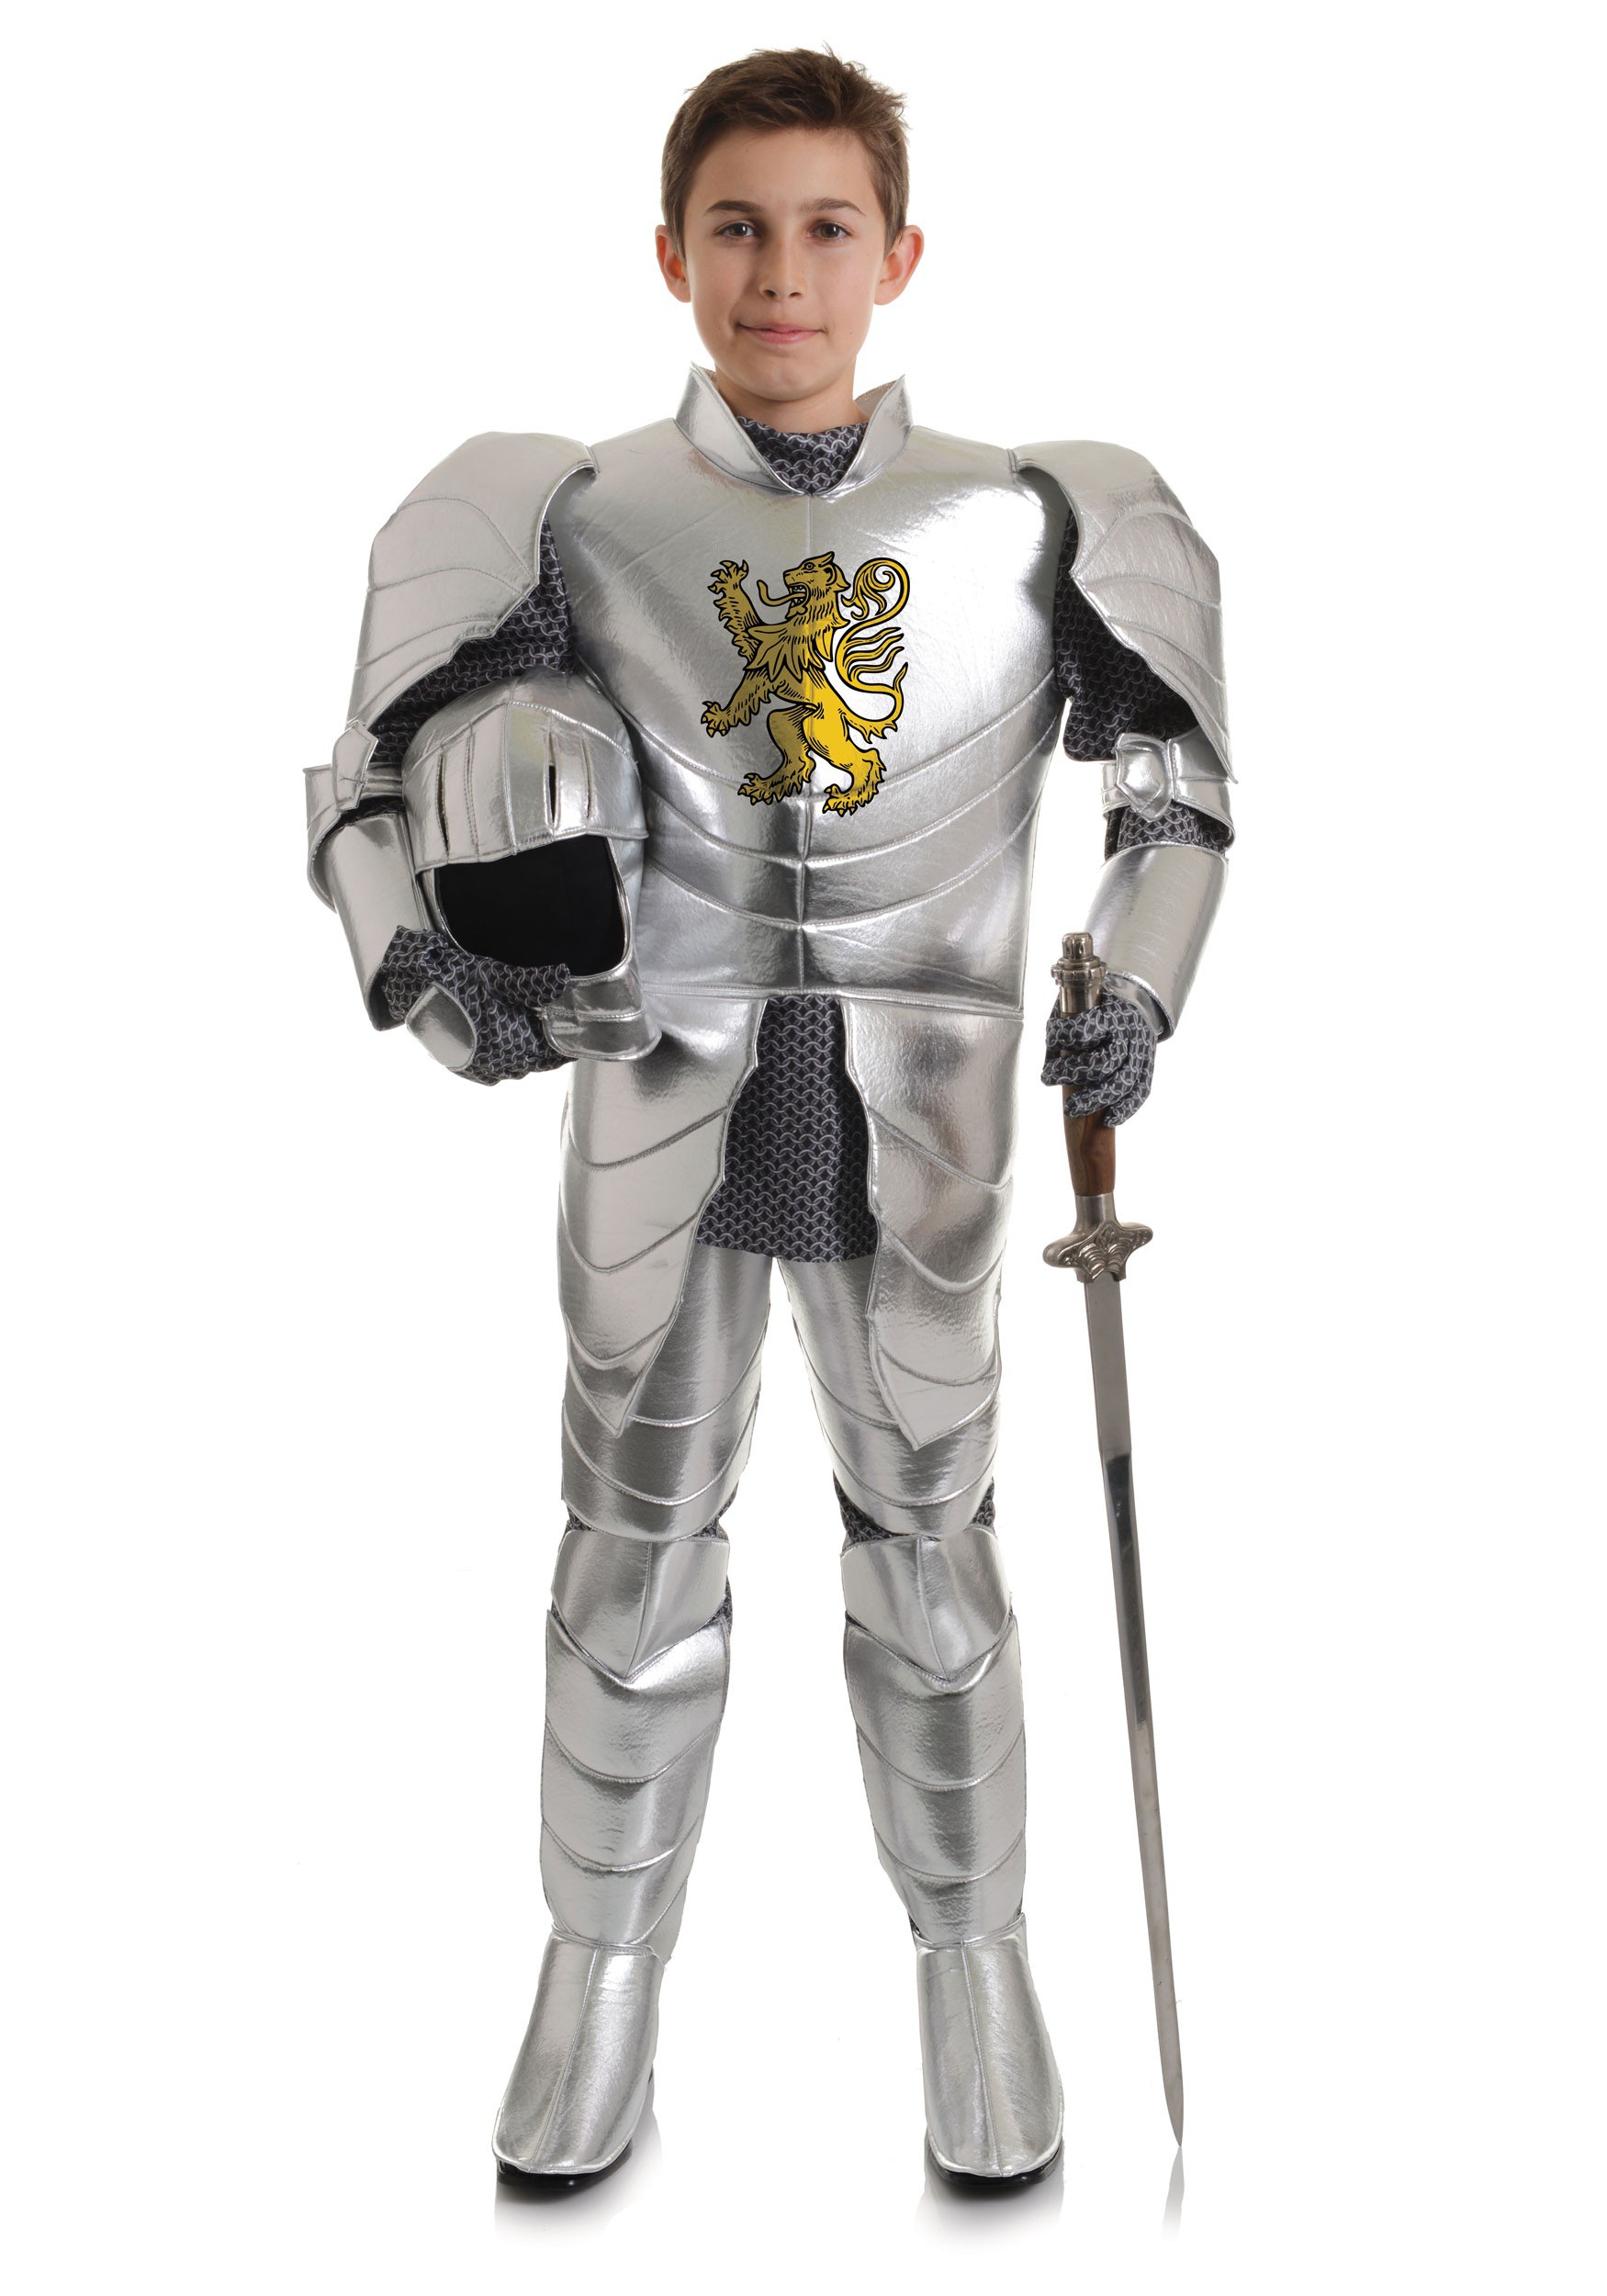 Kid’s Knight Costume